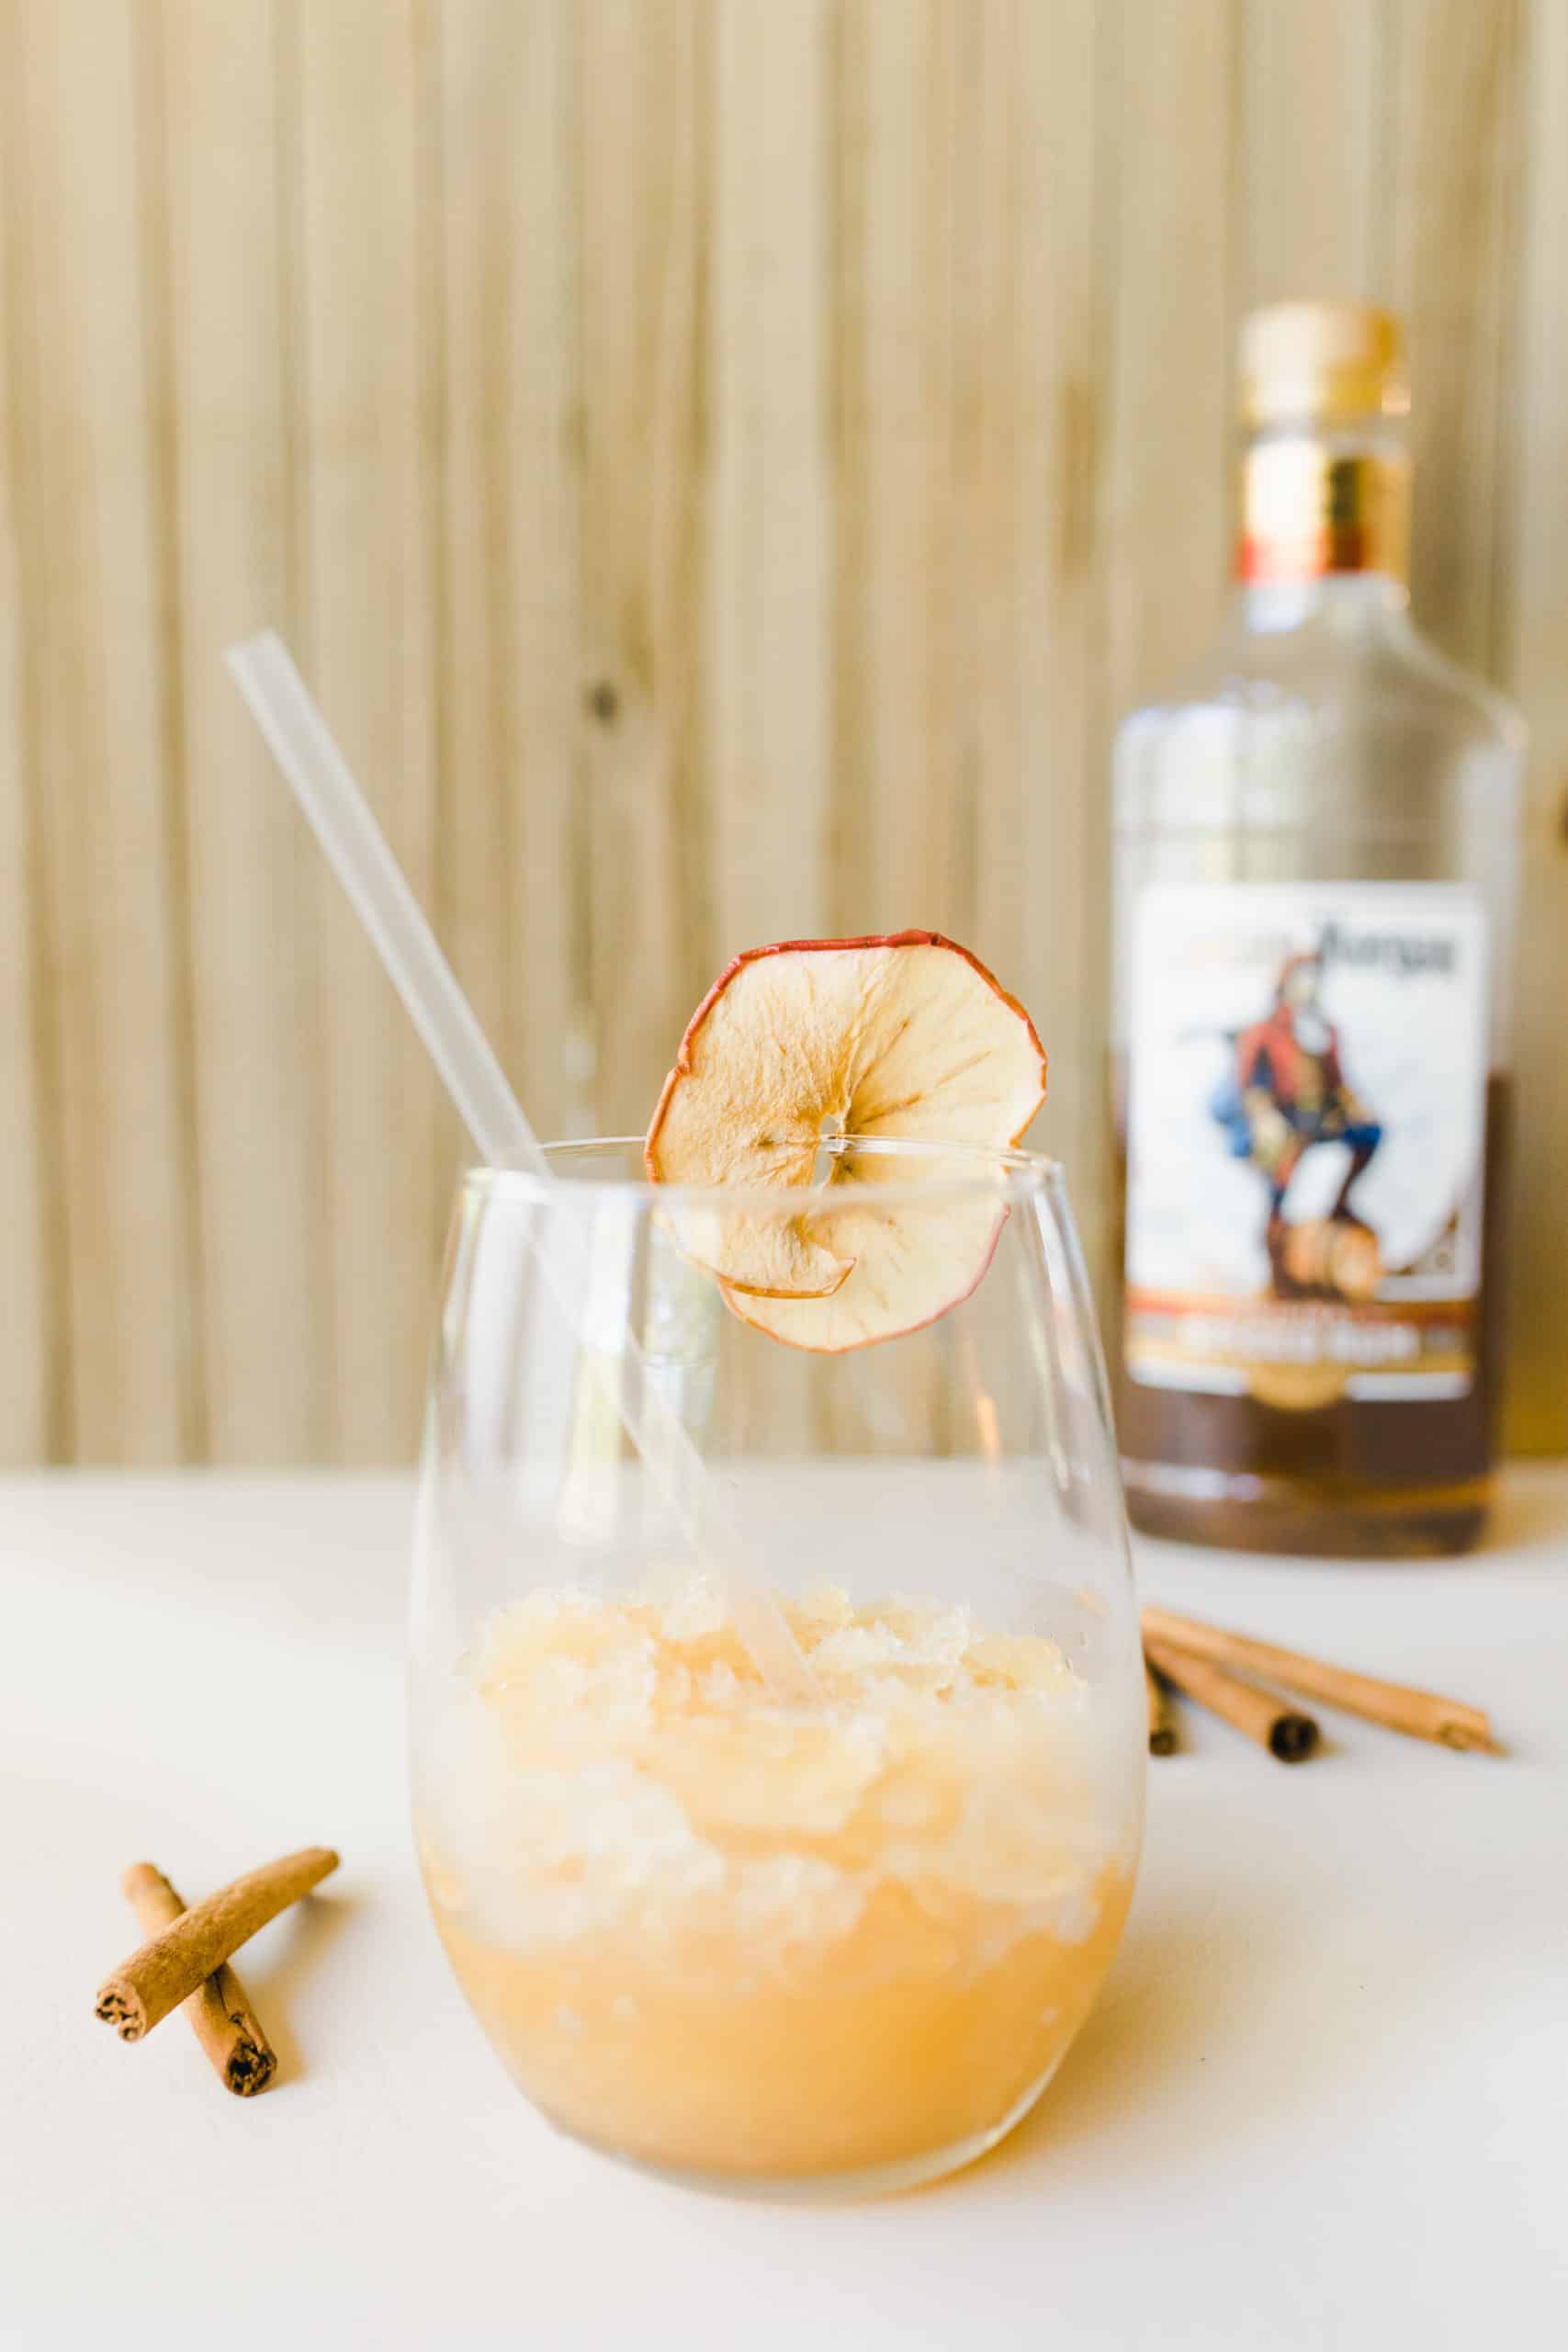 Captain Morgan Apple Cider Slush Cocktail with a dried apple garnish.